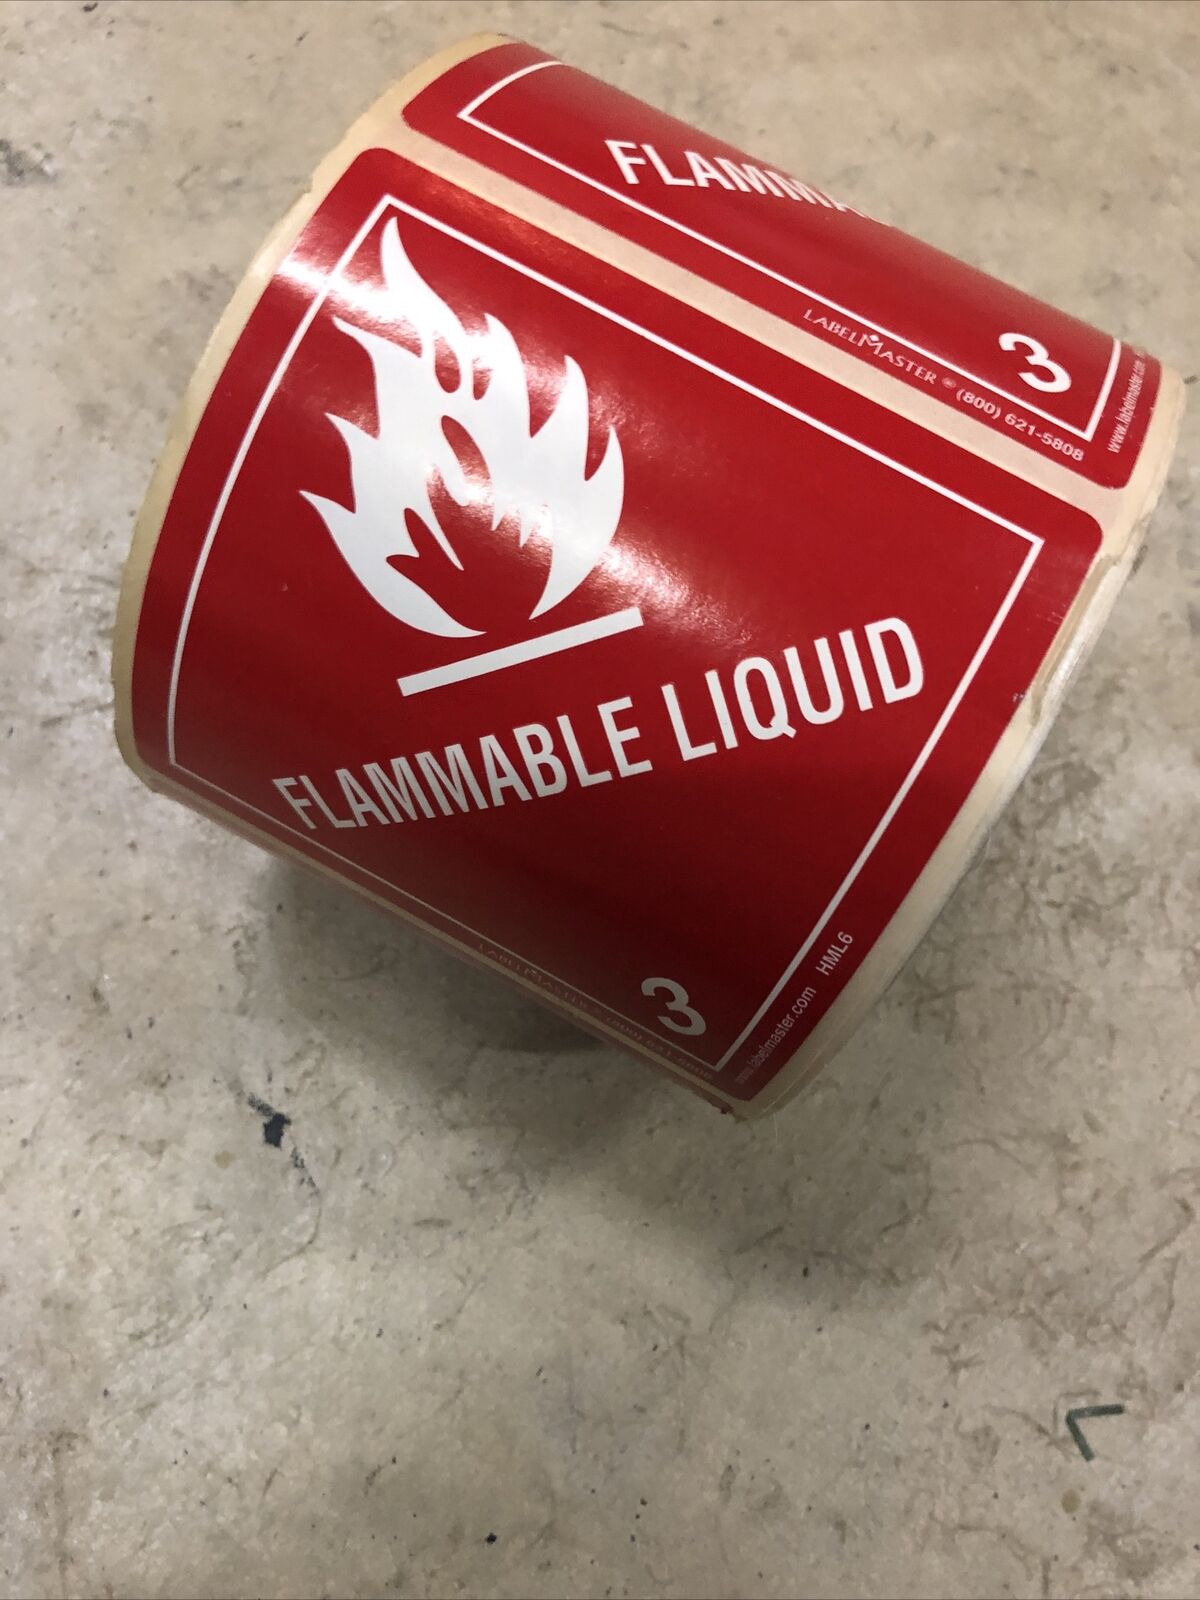 (10) FLAMMABLE LIQUID Decals - Hazard Sticker Warning Label  4\